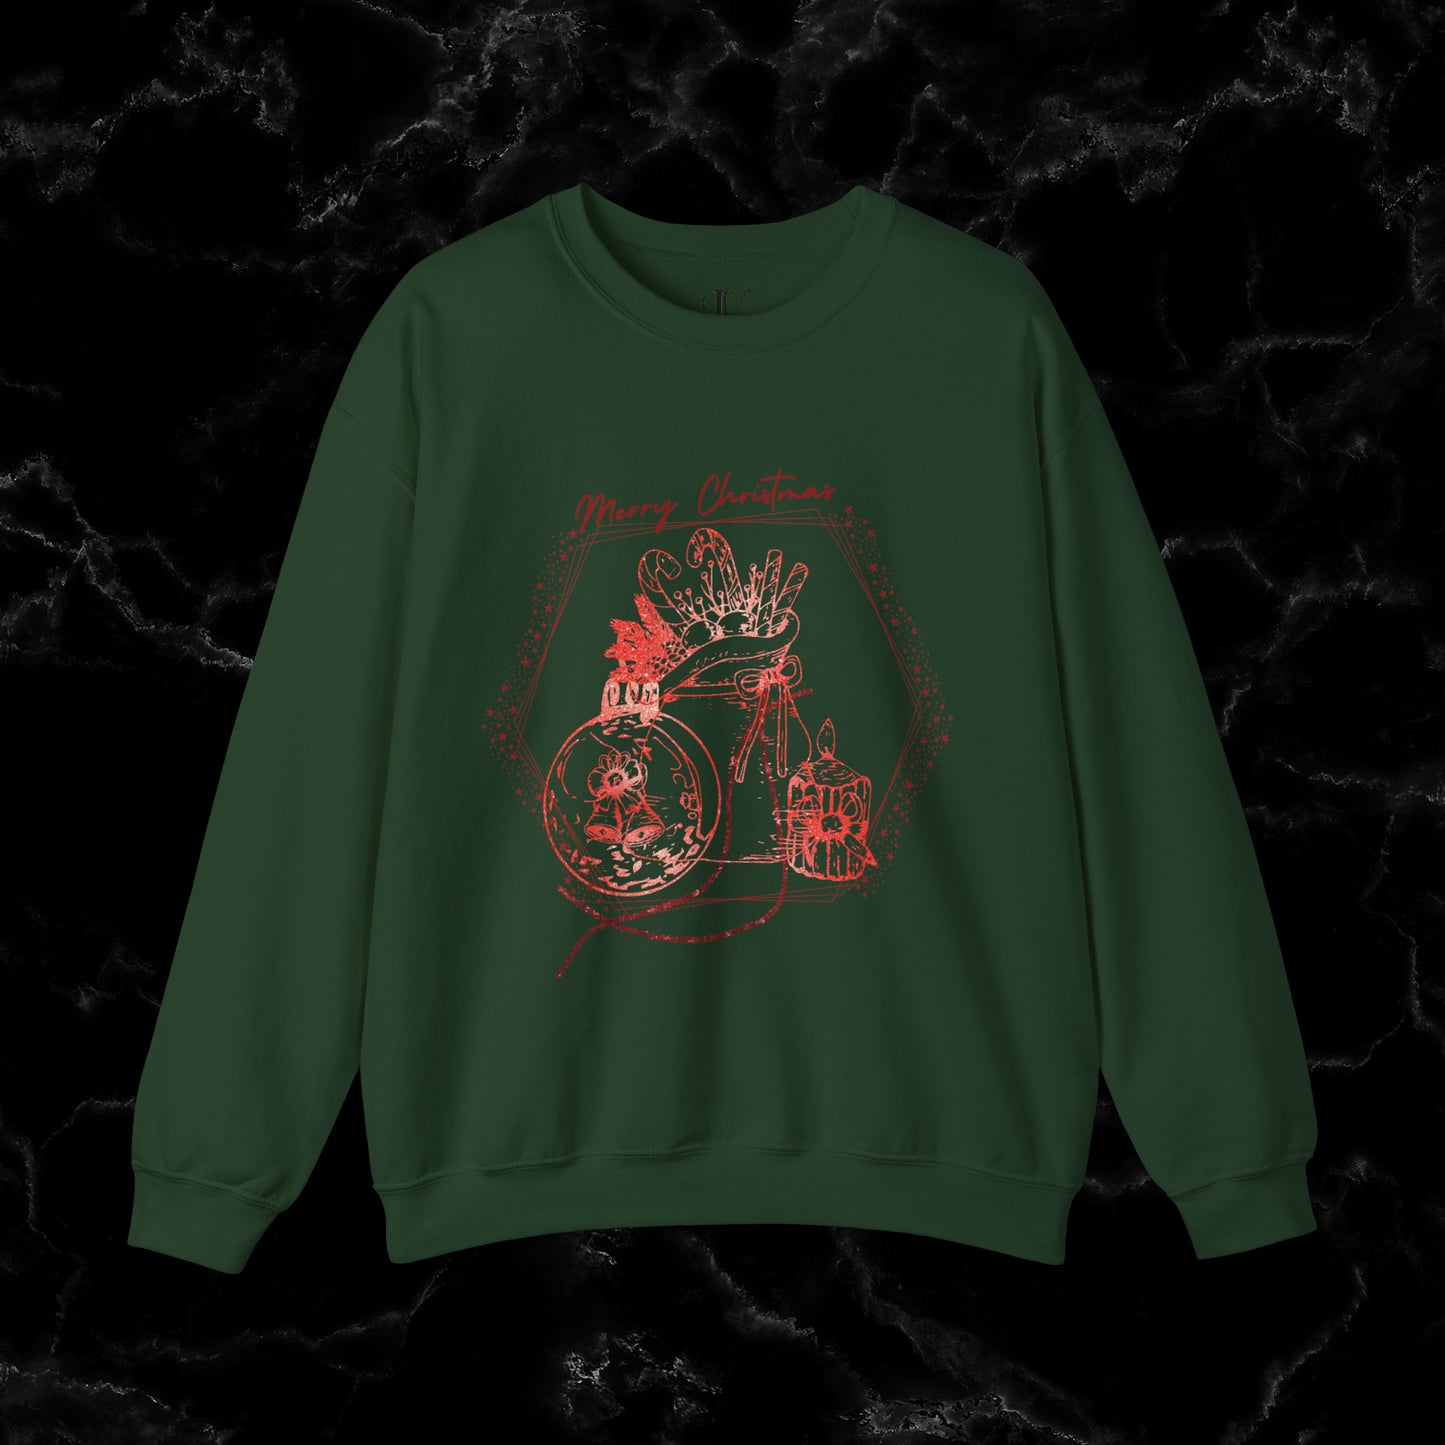 Merry Christmas Sweatshirt - Xmas Bag, Unique Christmas Shirt, Perfect Holiday Gift Sweatshirt S Forest Green 